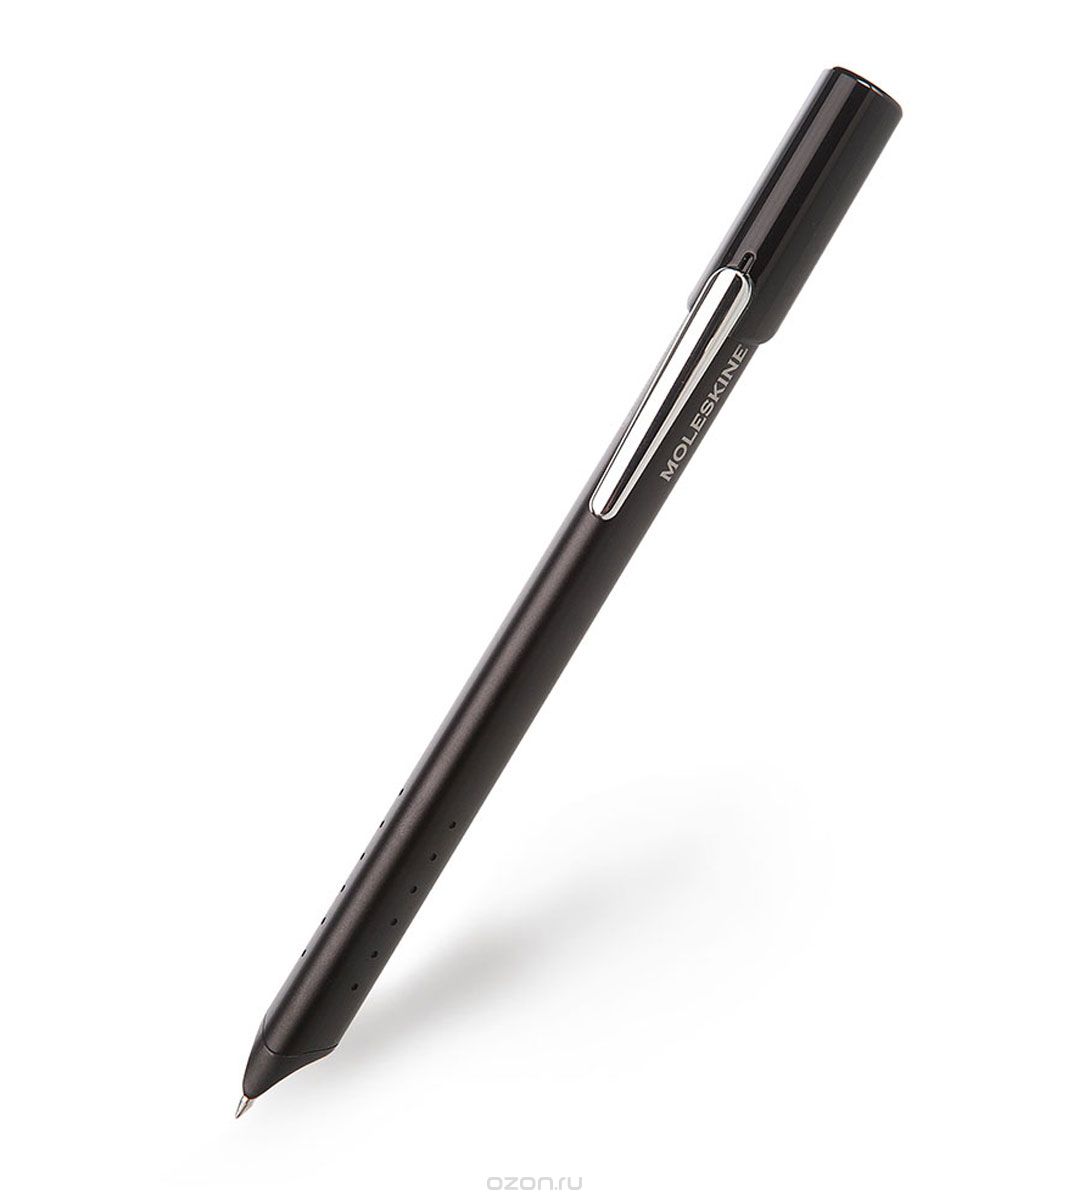 Moleskine  Smart Writing  Paper Tablet /  Smart Pen+